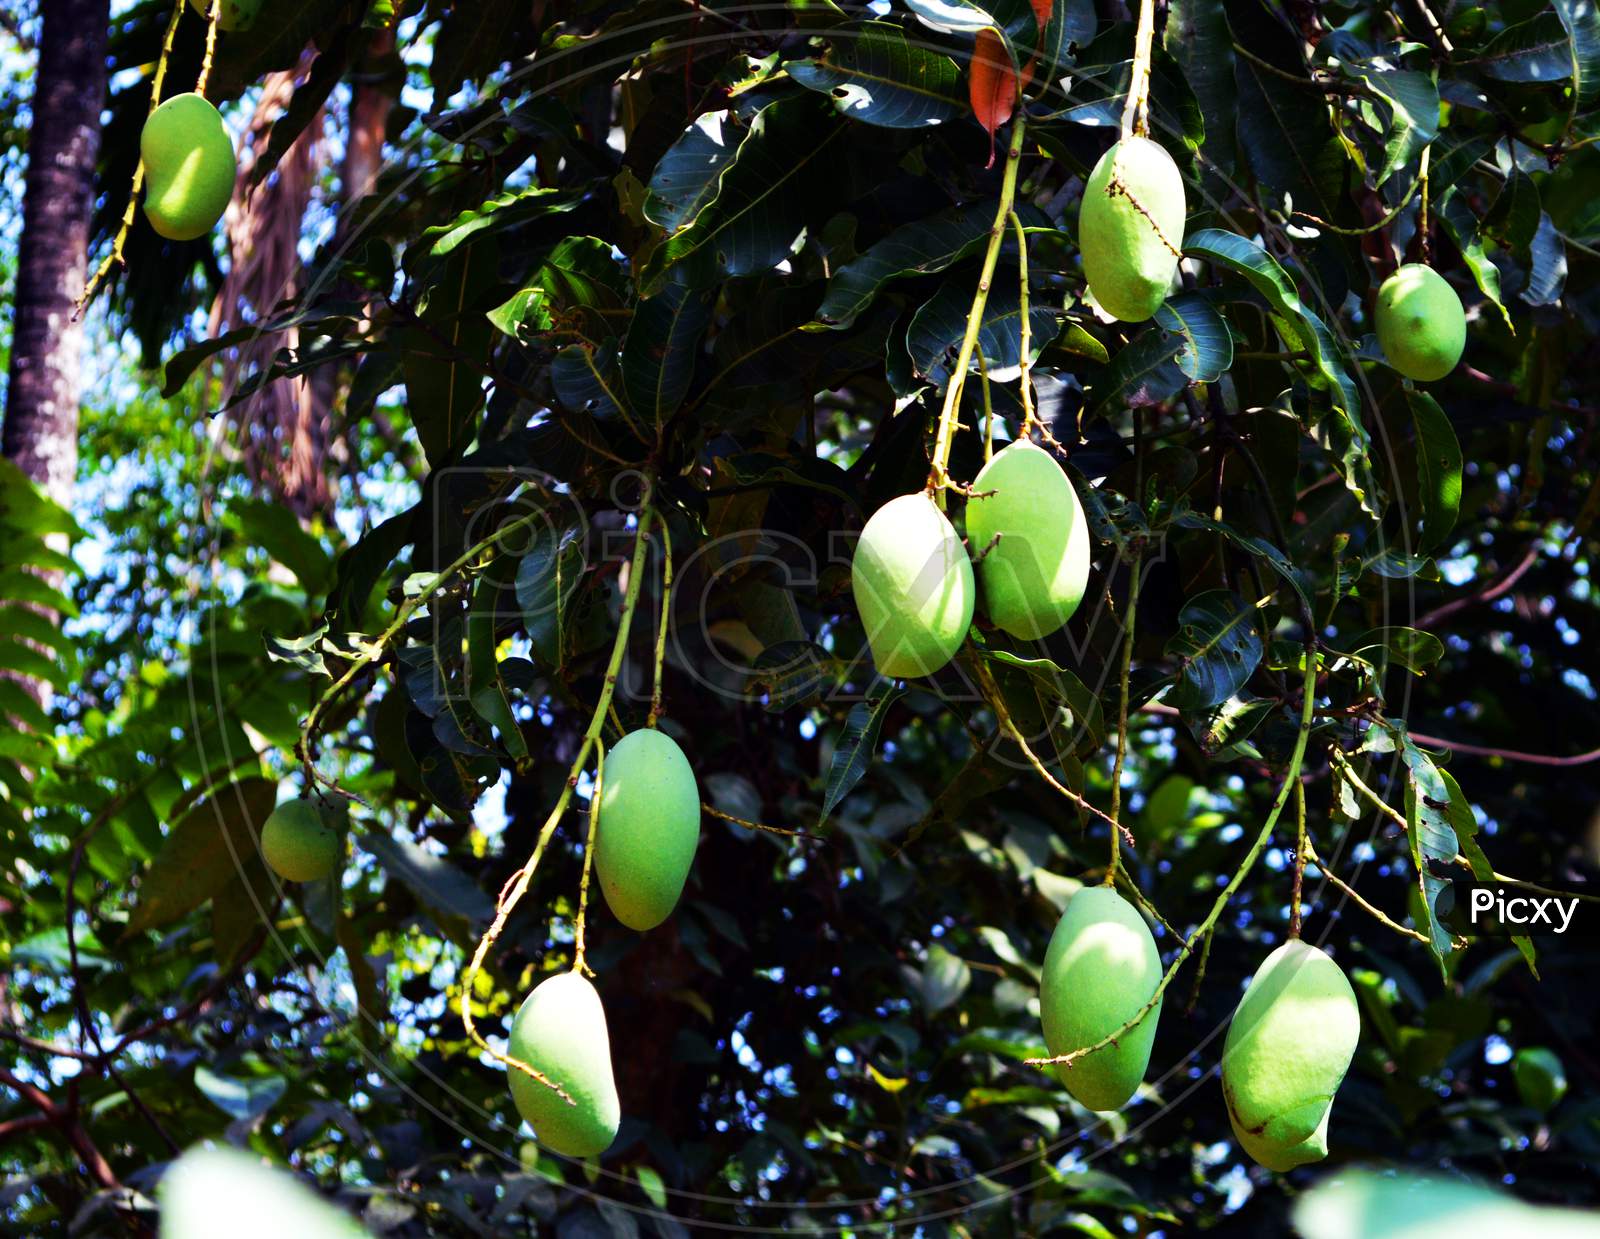 Native Mango Of Kerala, A Delicious And Tasty